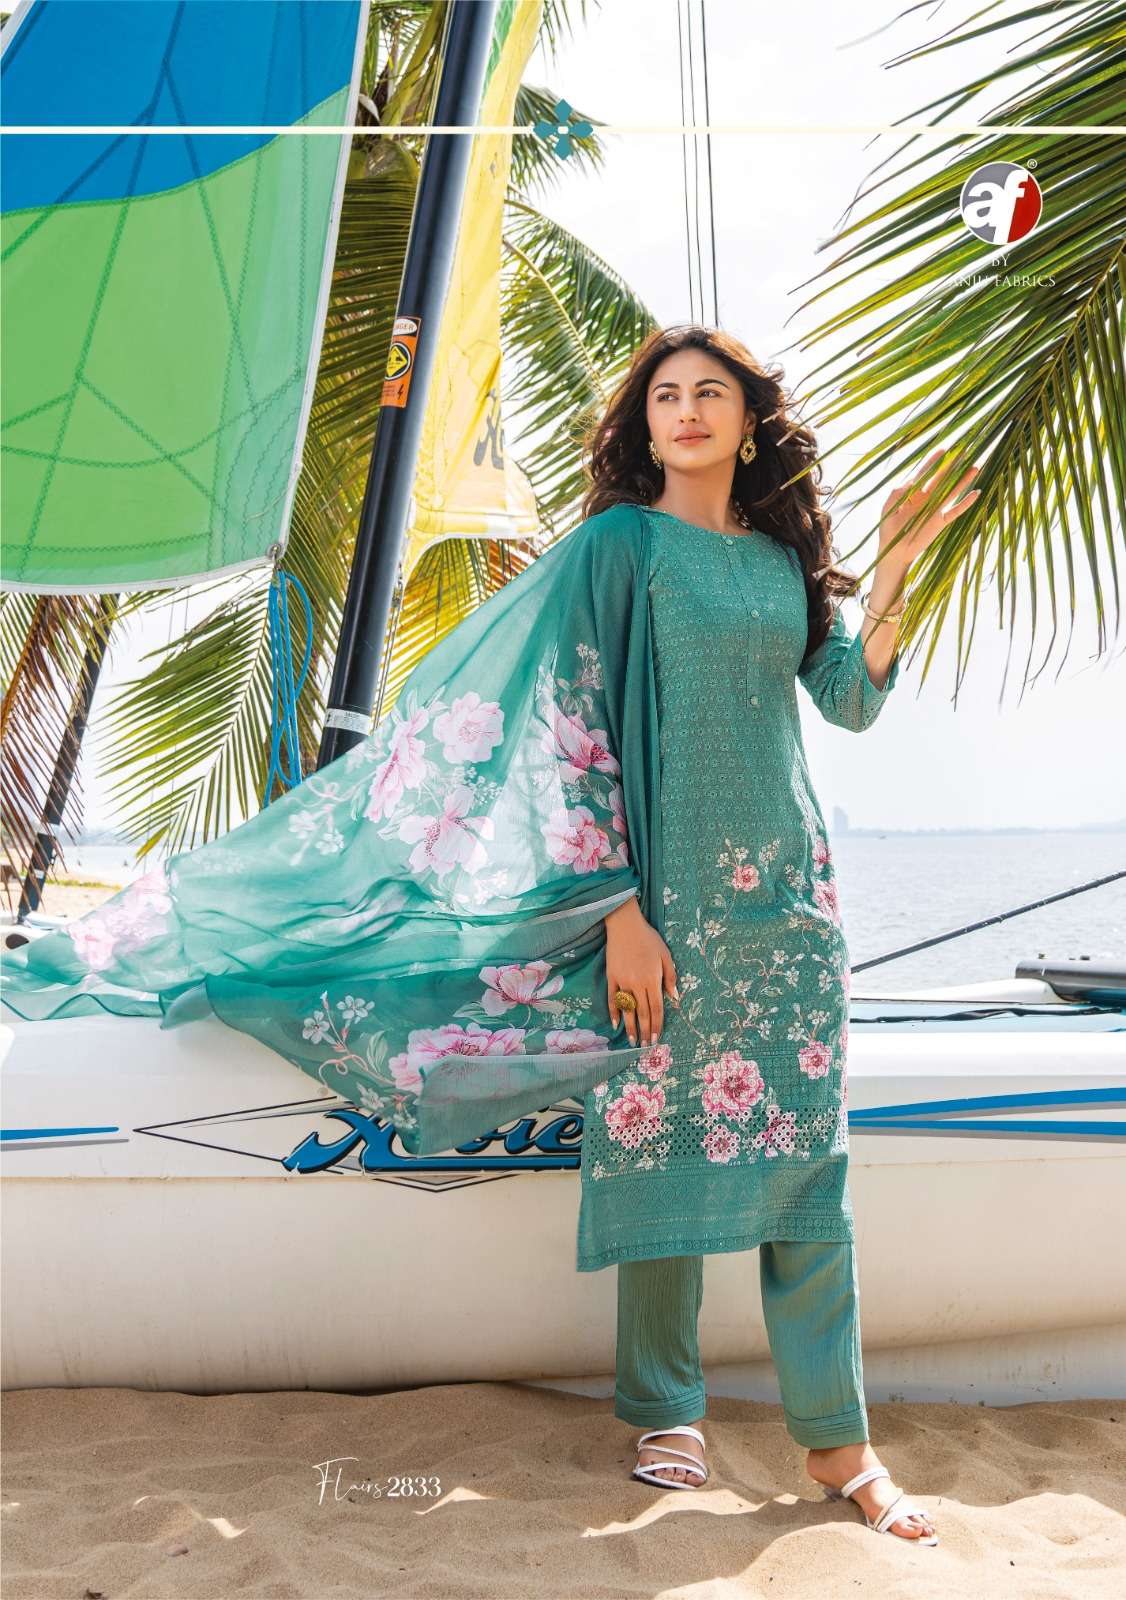 anju fabrics flairs 2831-2836 series fancy designer kurtis catalogue online market surat 